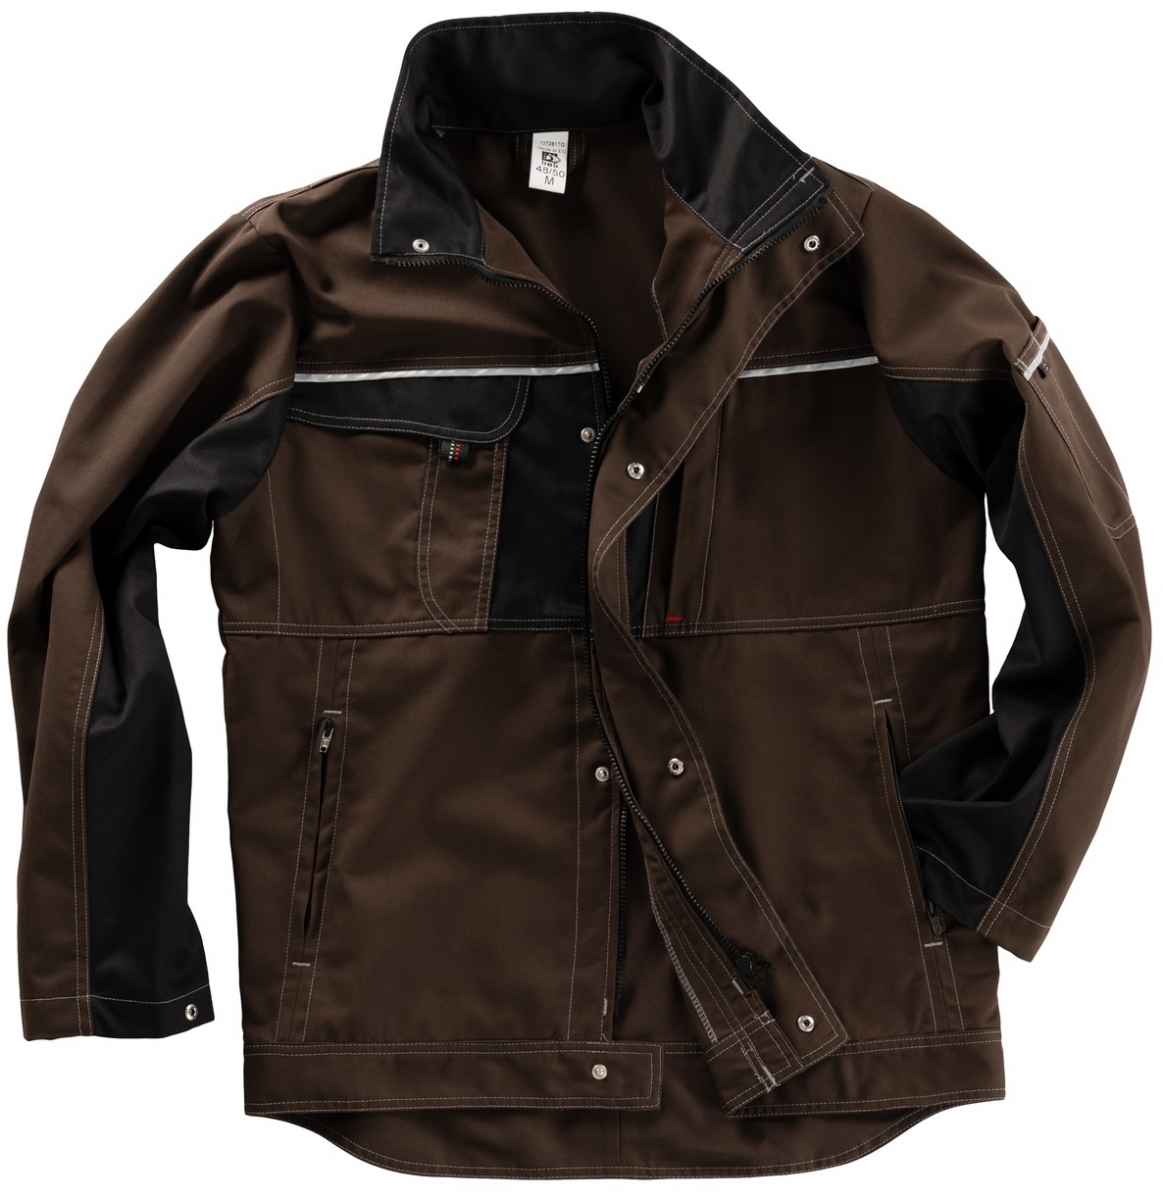 BEB-Workwear, Arbeitsjacke, Herren-Arbeits-Berufs-Bund-Jacke, Inflame chocolate brown/schwarz